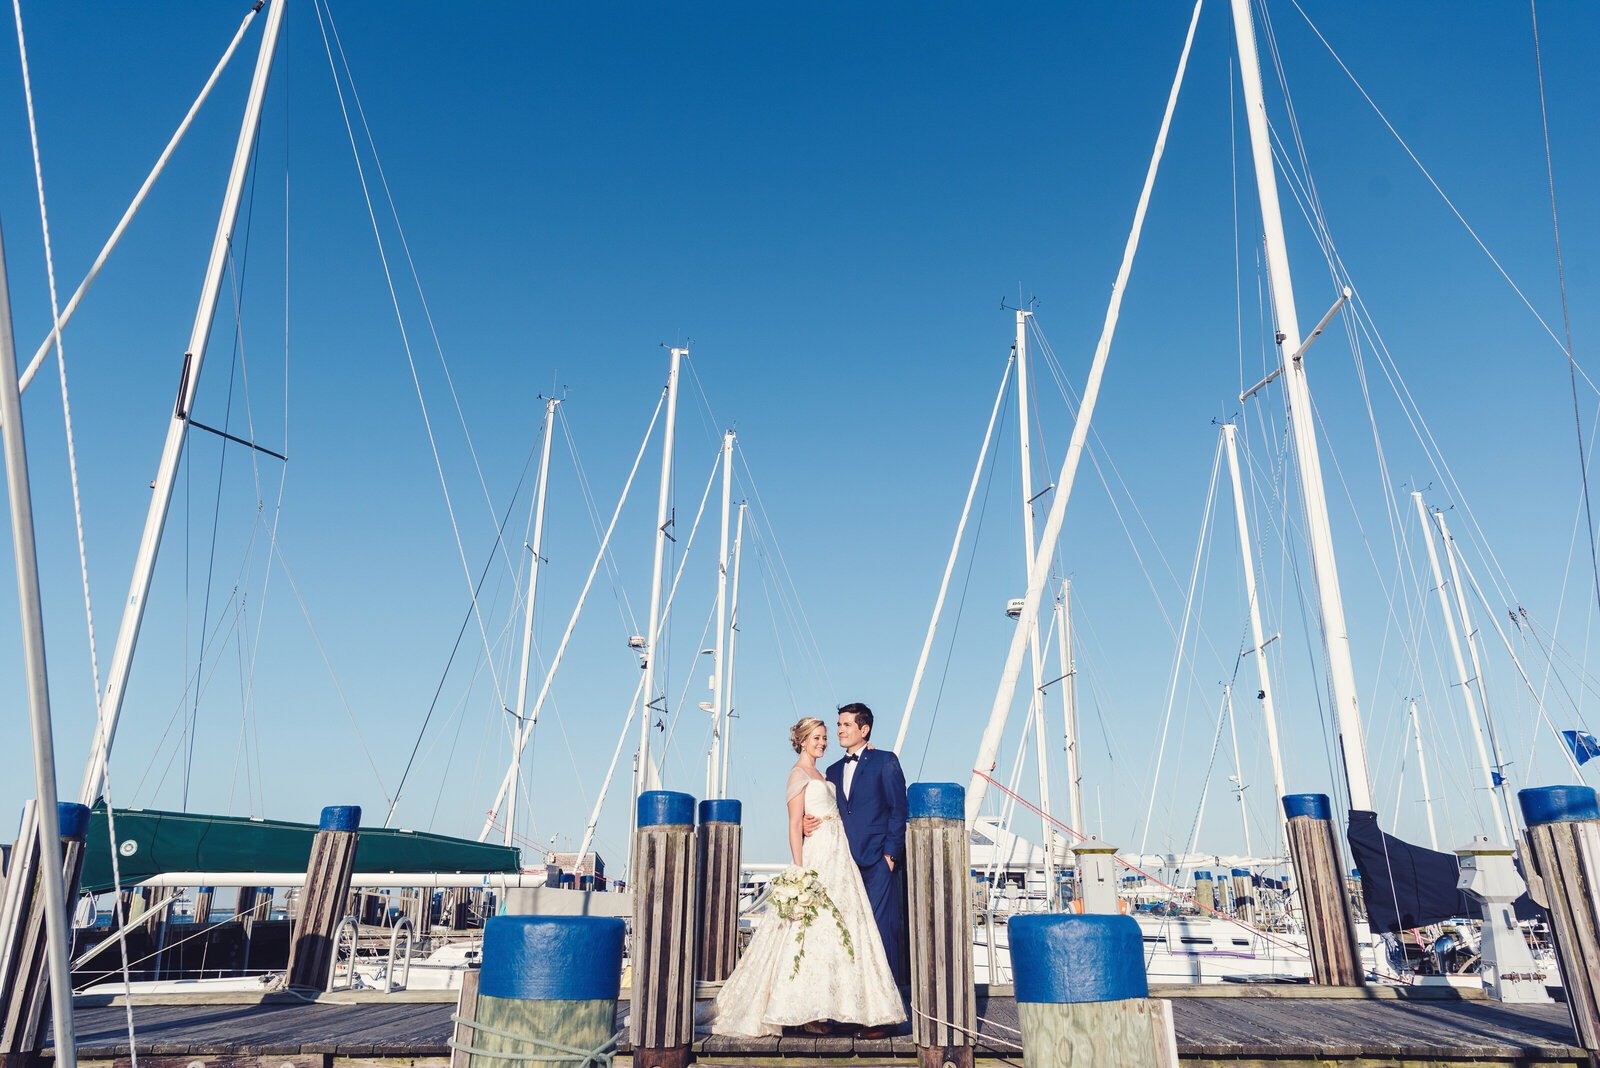 Zofia&Co_Nantucket wedding photography-098